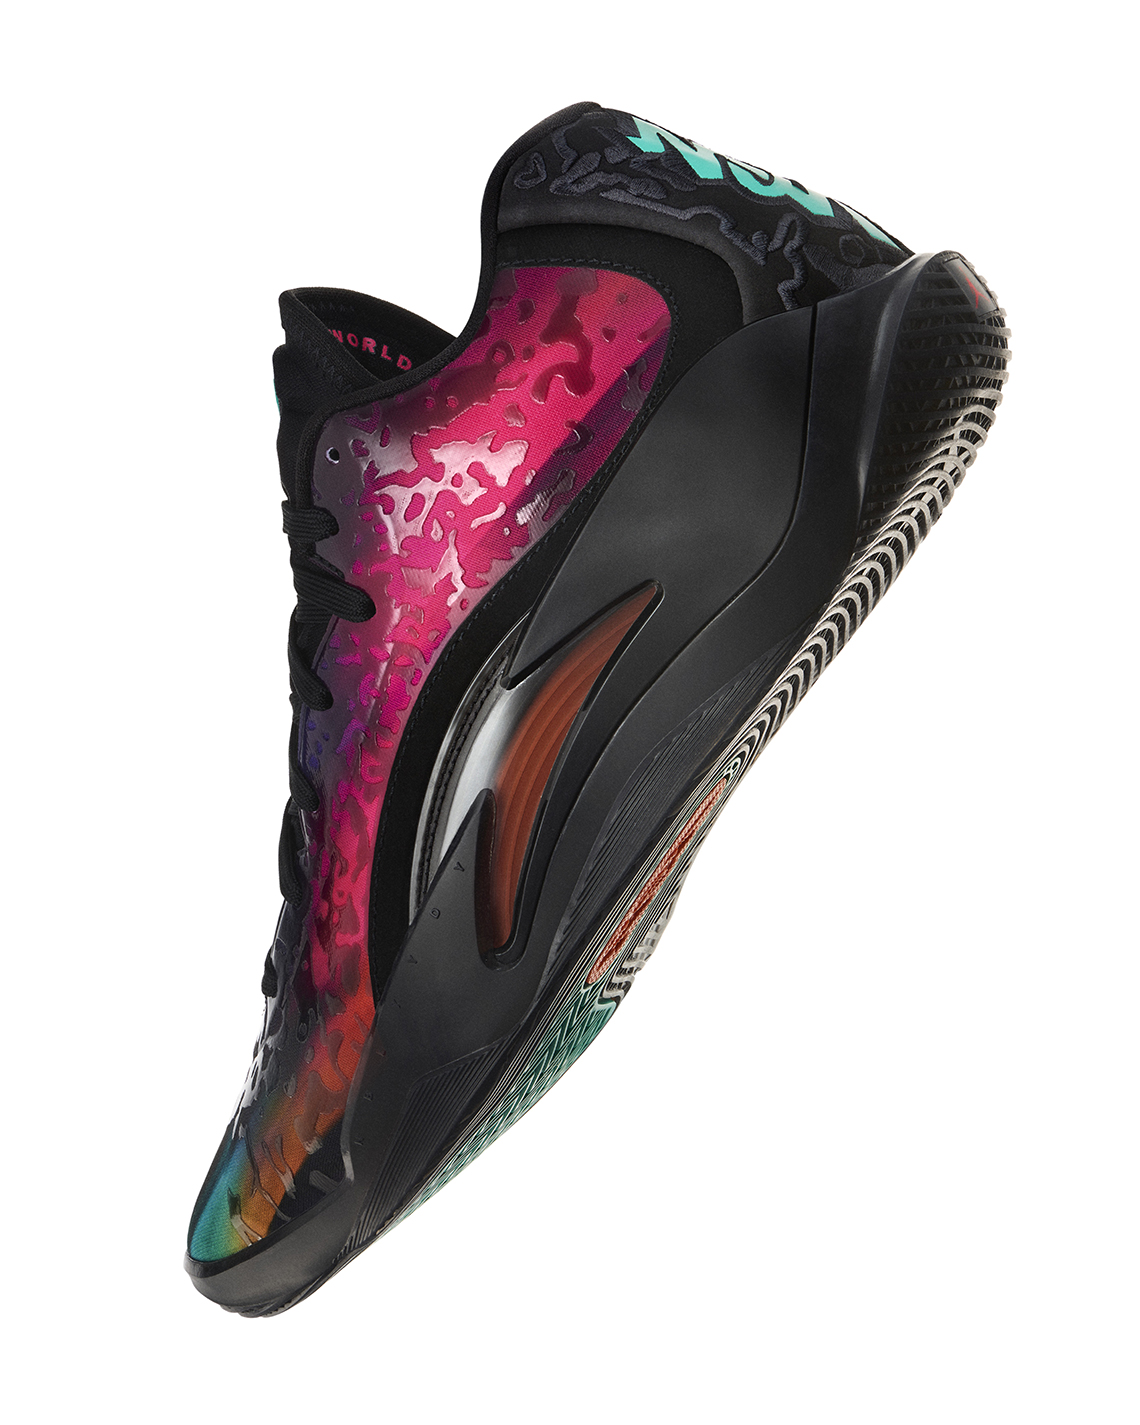 Jordan Zion 3 First Look + Release Dates | SneakerNews.com